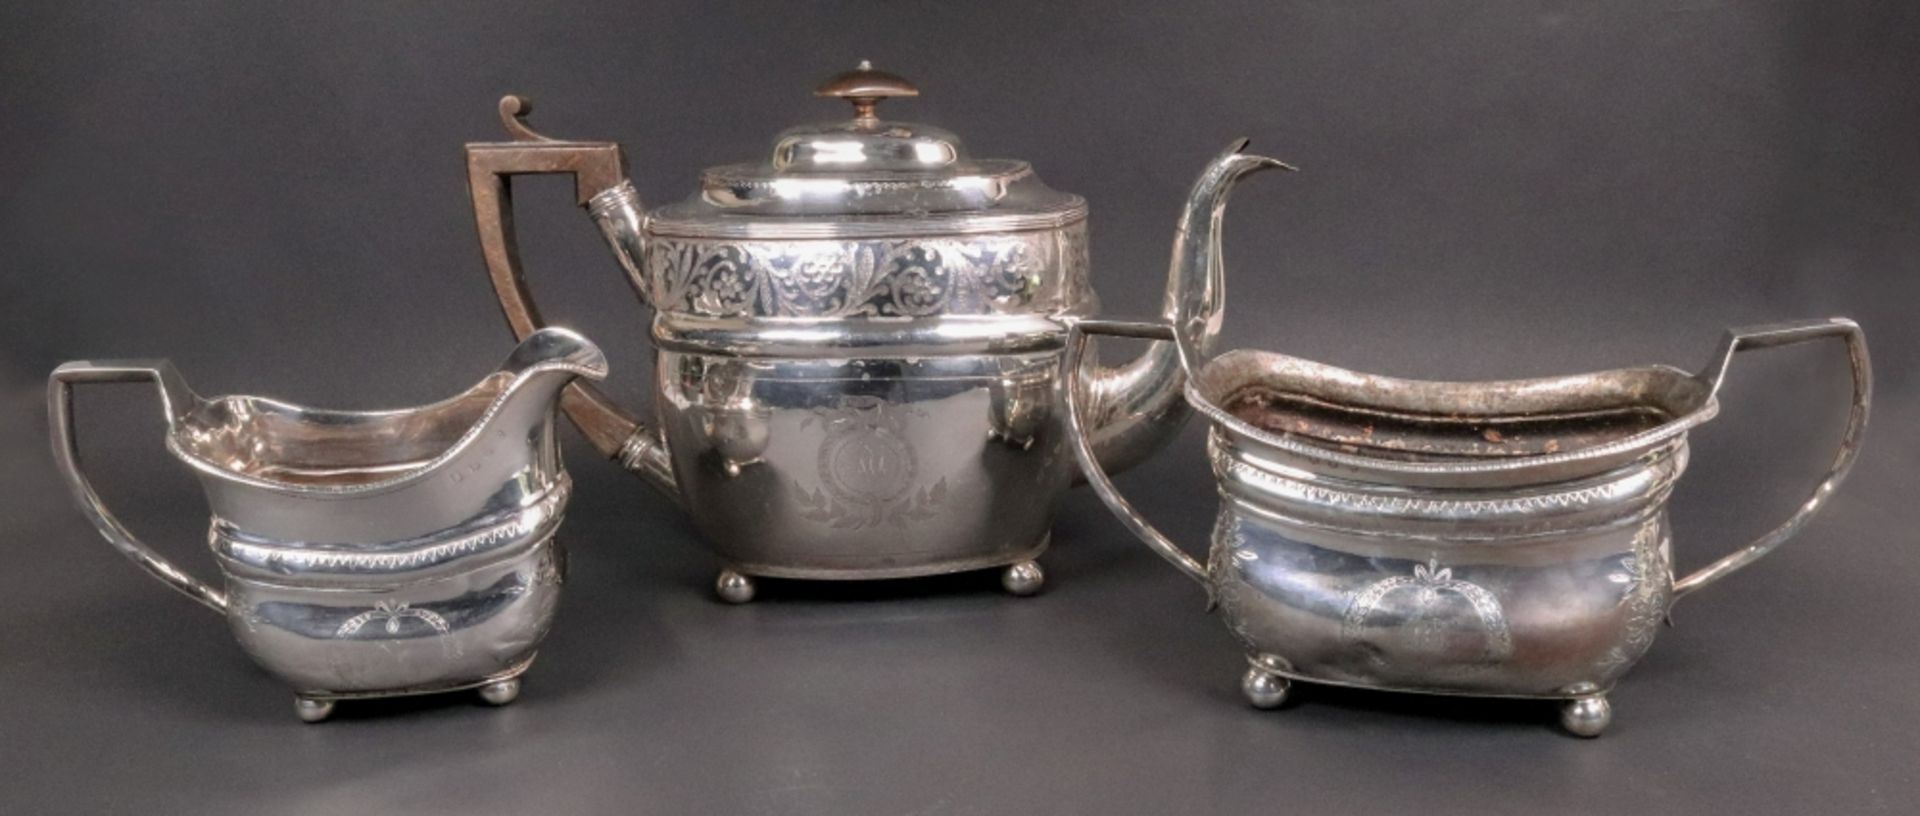 A George III Irish silver sugar basin and milk jug, Dublin 1811, makers marks unclear,